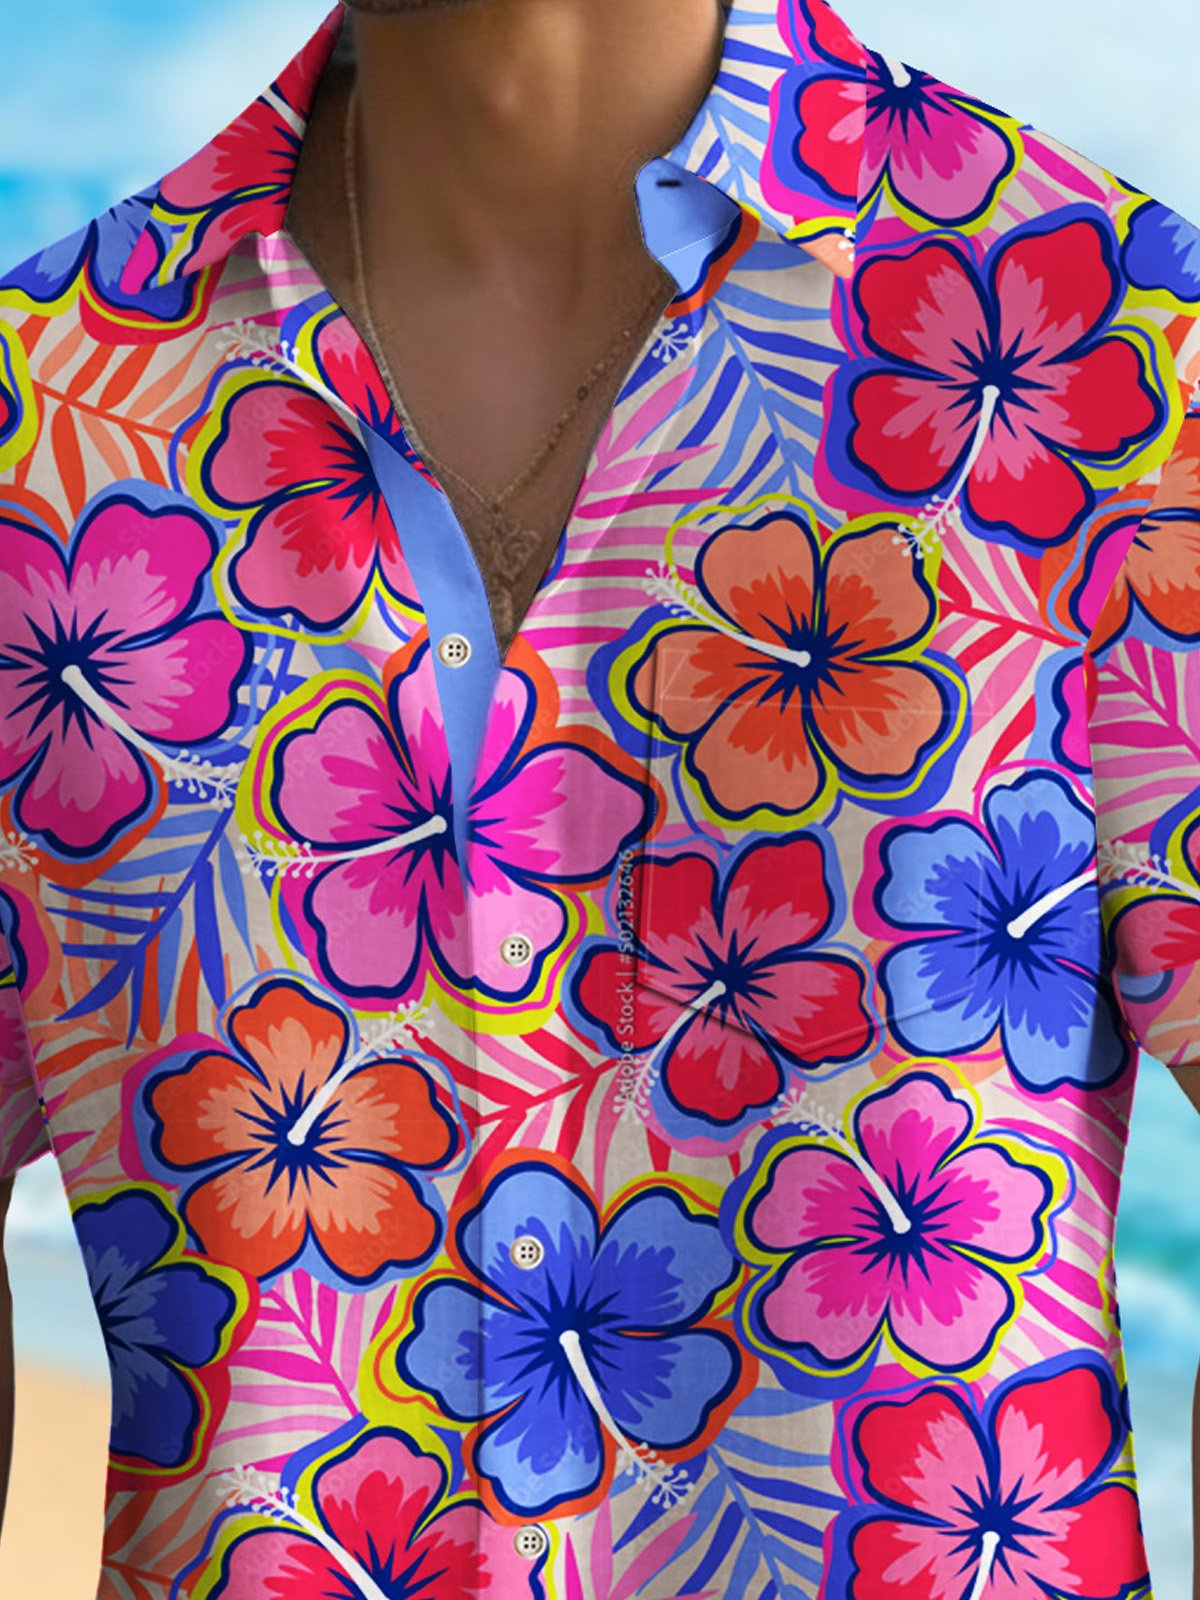 Royaura® Beach Vacation Men's Hawaiian Shirt Tropical Floral Art Wrinkle Free Seersucker Pocket Camp Shirt Big Tall